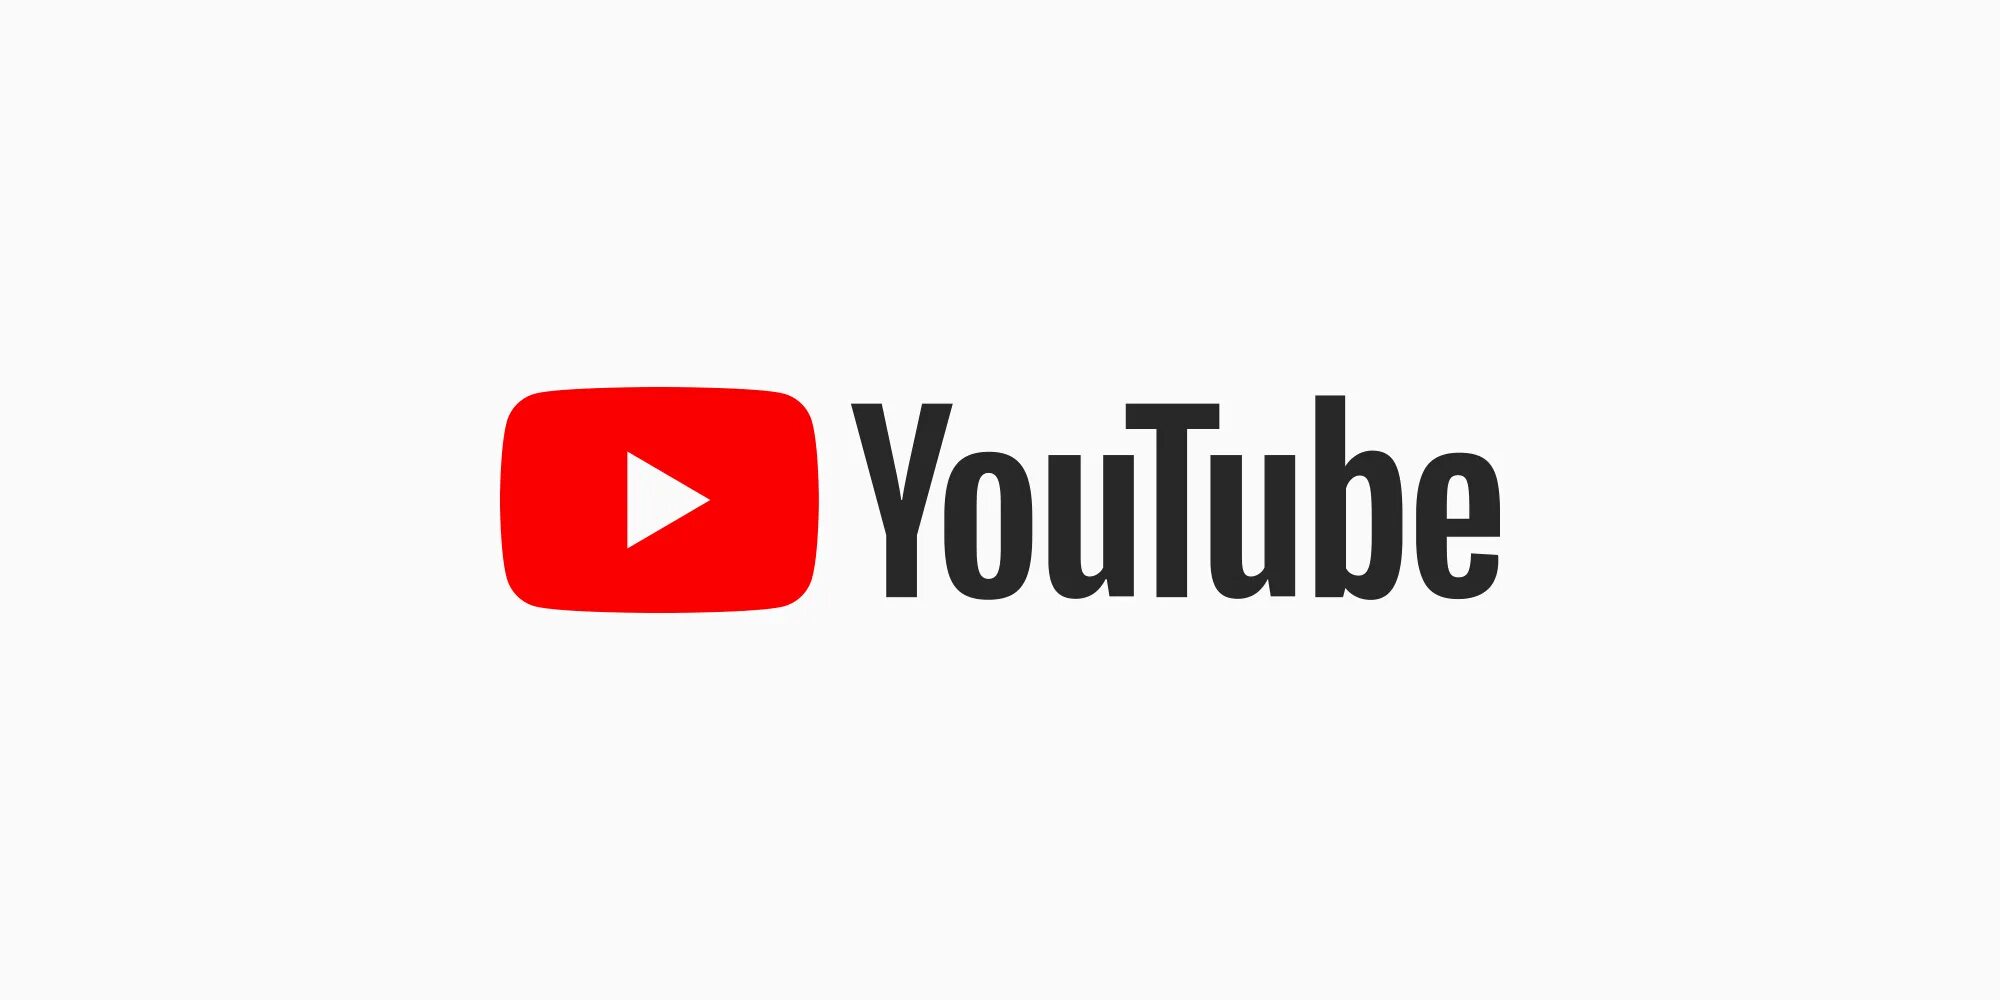 Версия youtube без рекламы. Логотип ютуб. YOUTUBER. Youtube э. Ютуюююююююююююююююююююююююююююююююююююю.